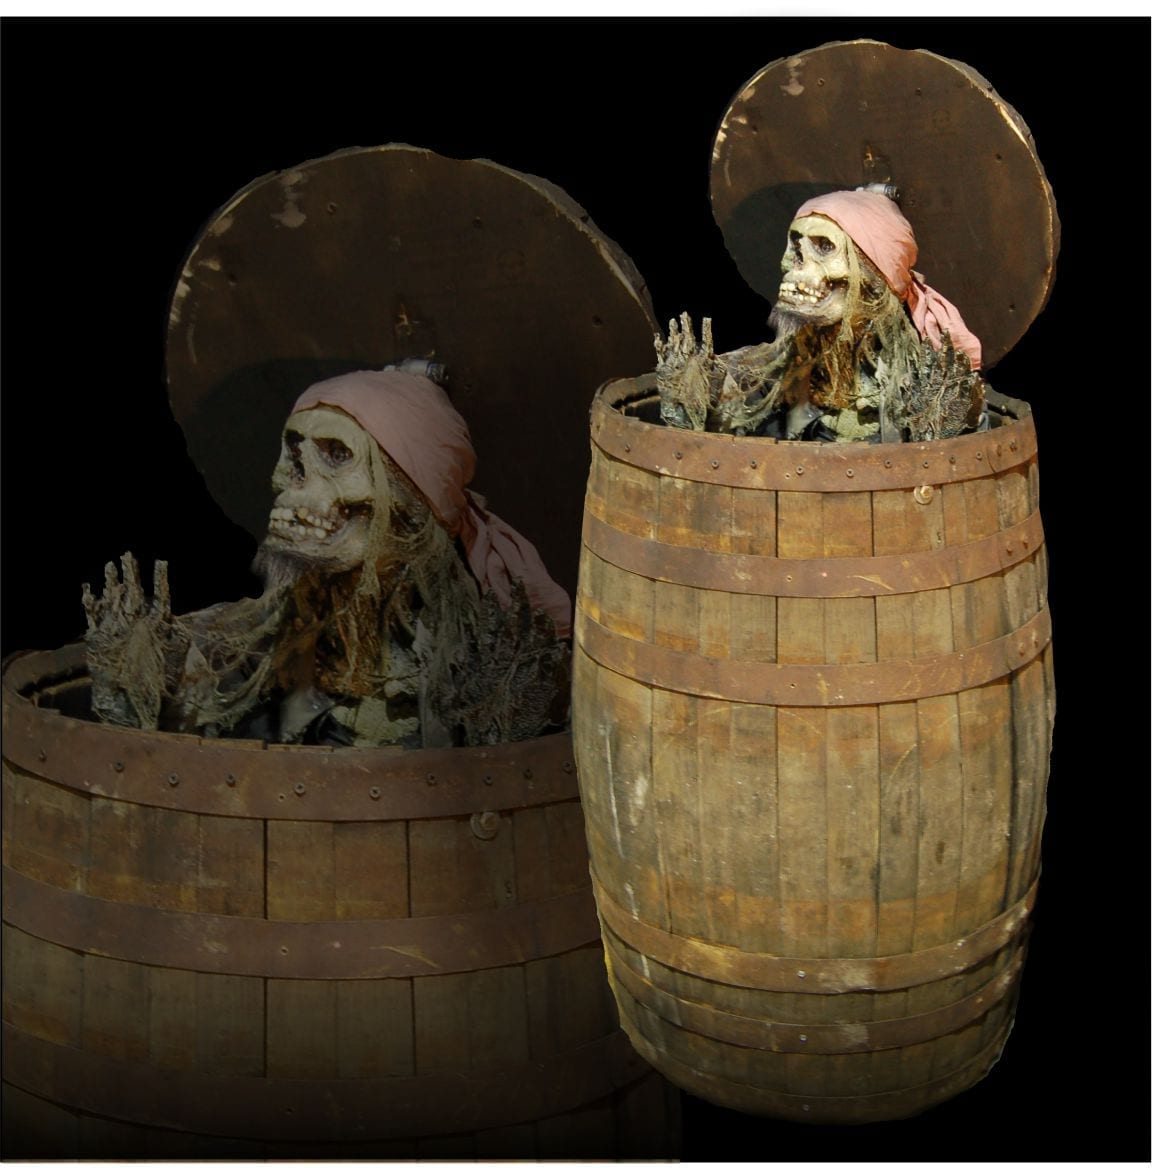 PIRBRL- Pirate out of Barrel